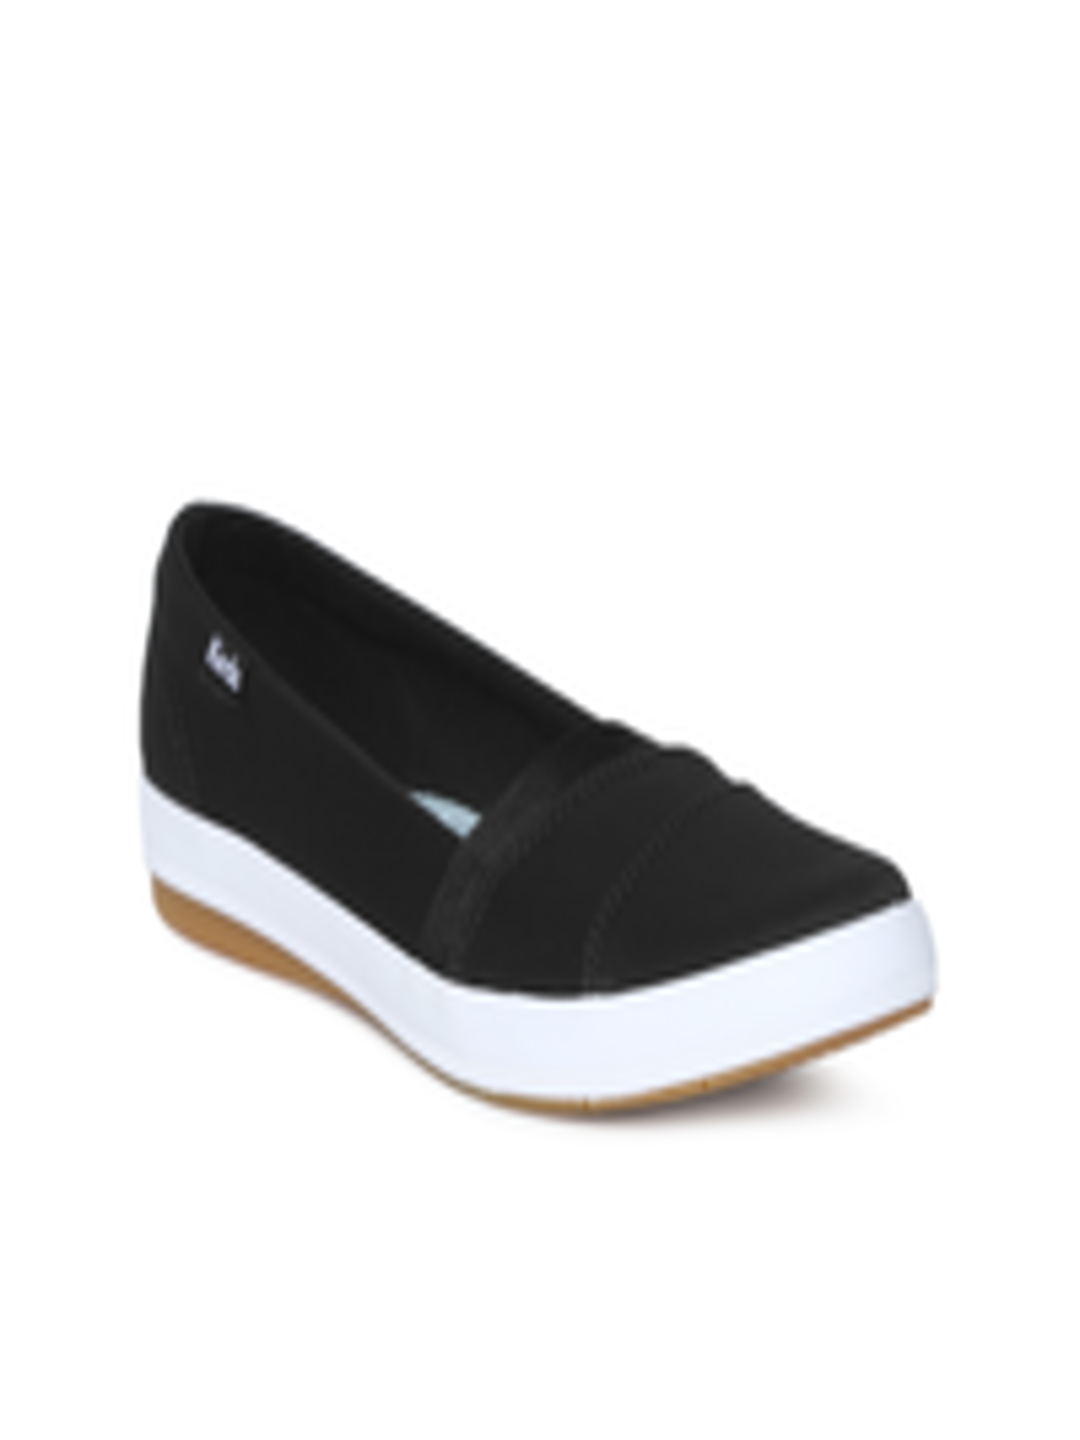 Buy Keds Women Black Slip On Sneakers - Casual Shoes for Women 8959571 ...